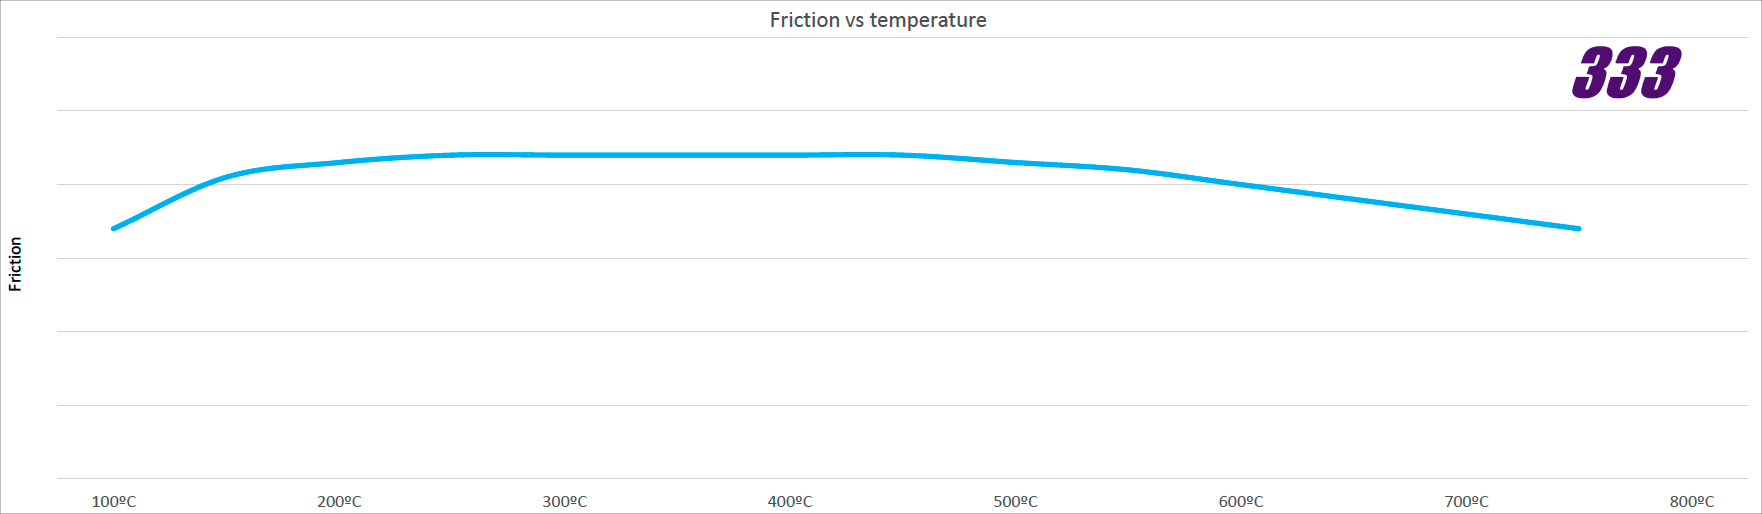 PFC 333 Compound Friction Vs Temperature